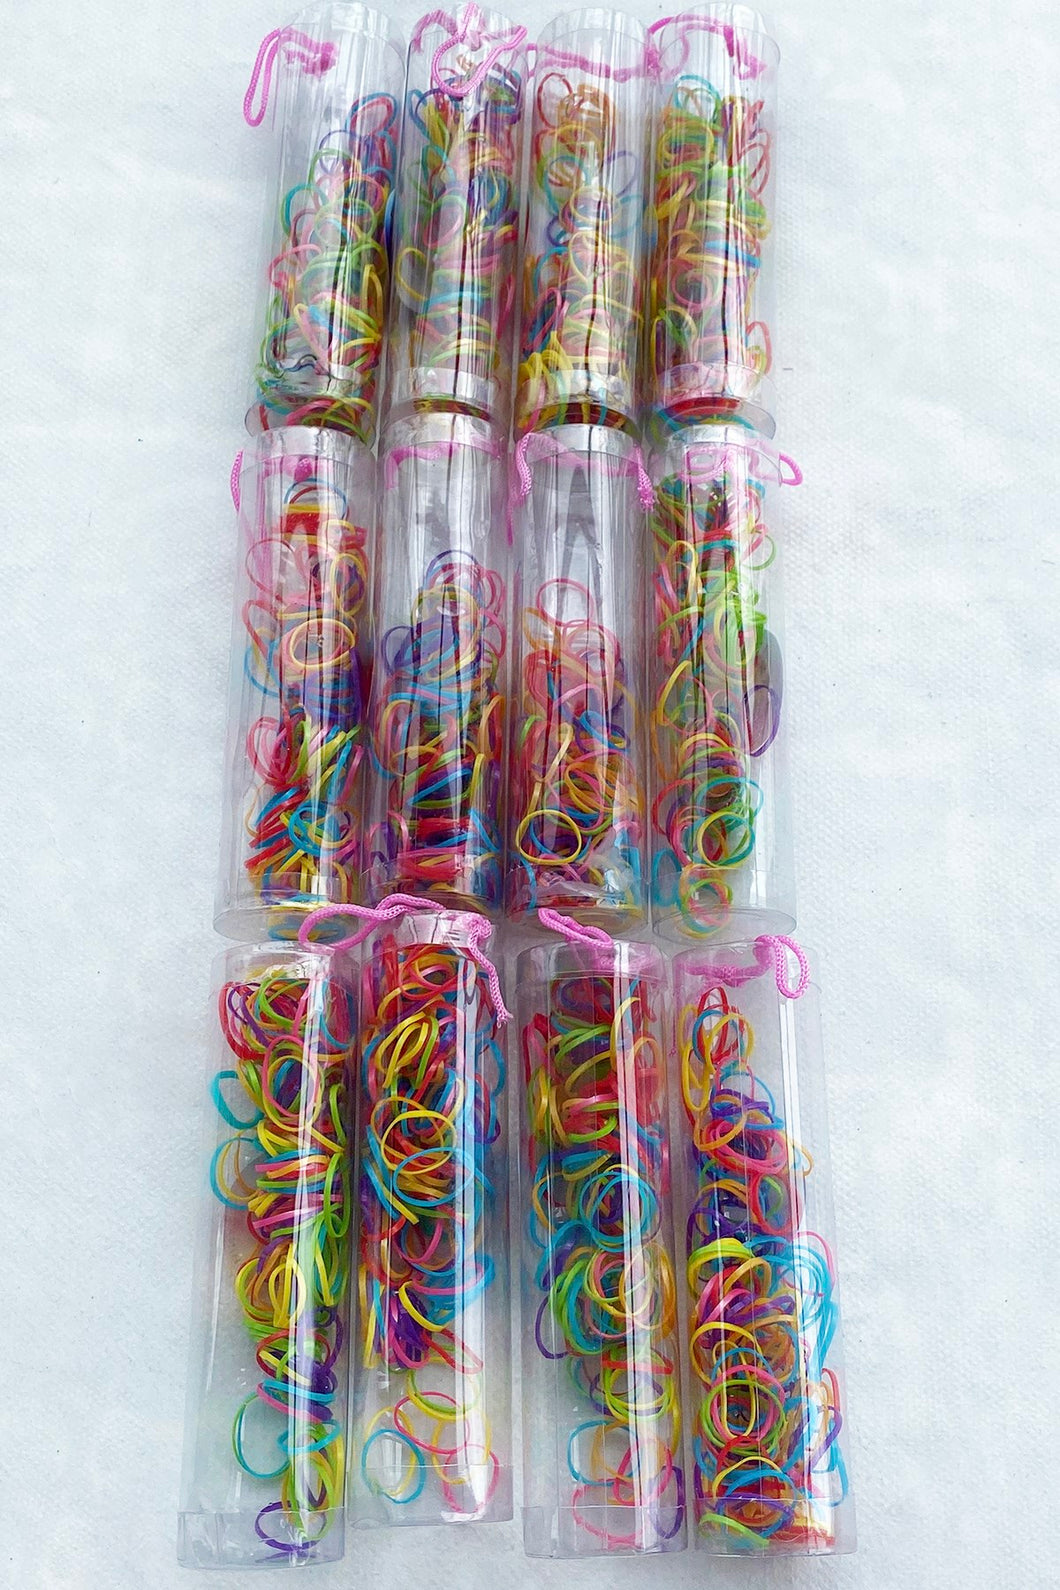 Mixed Color Hair Elastics With Plastic Jar - 12 Pieces